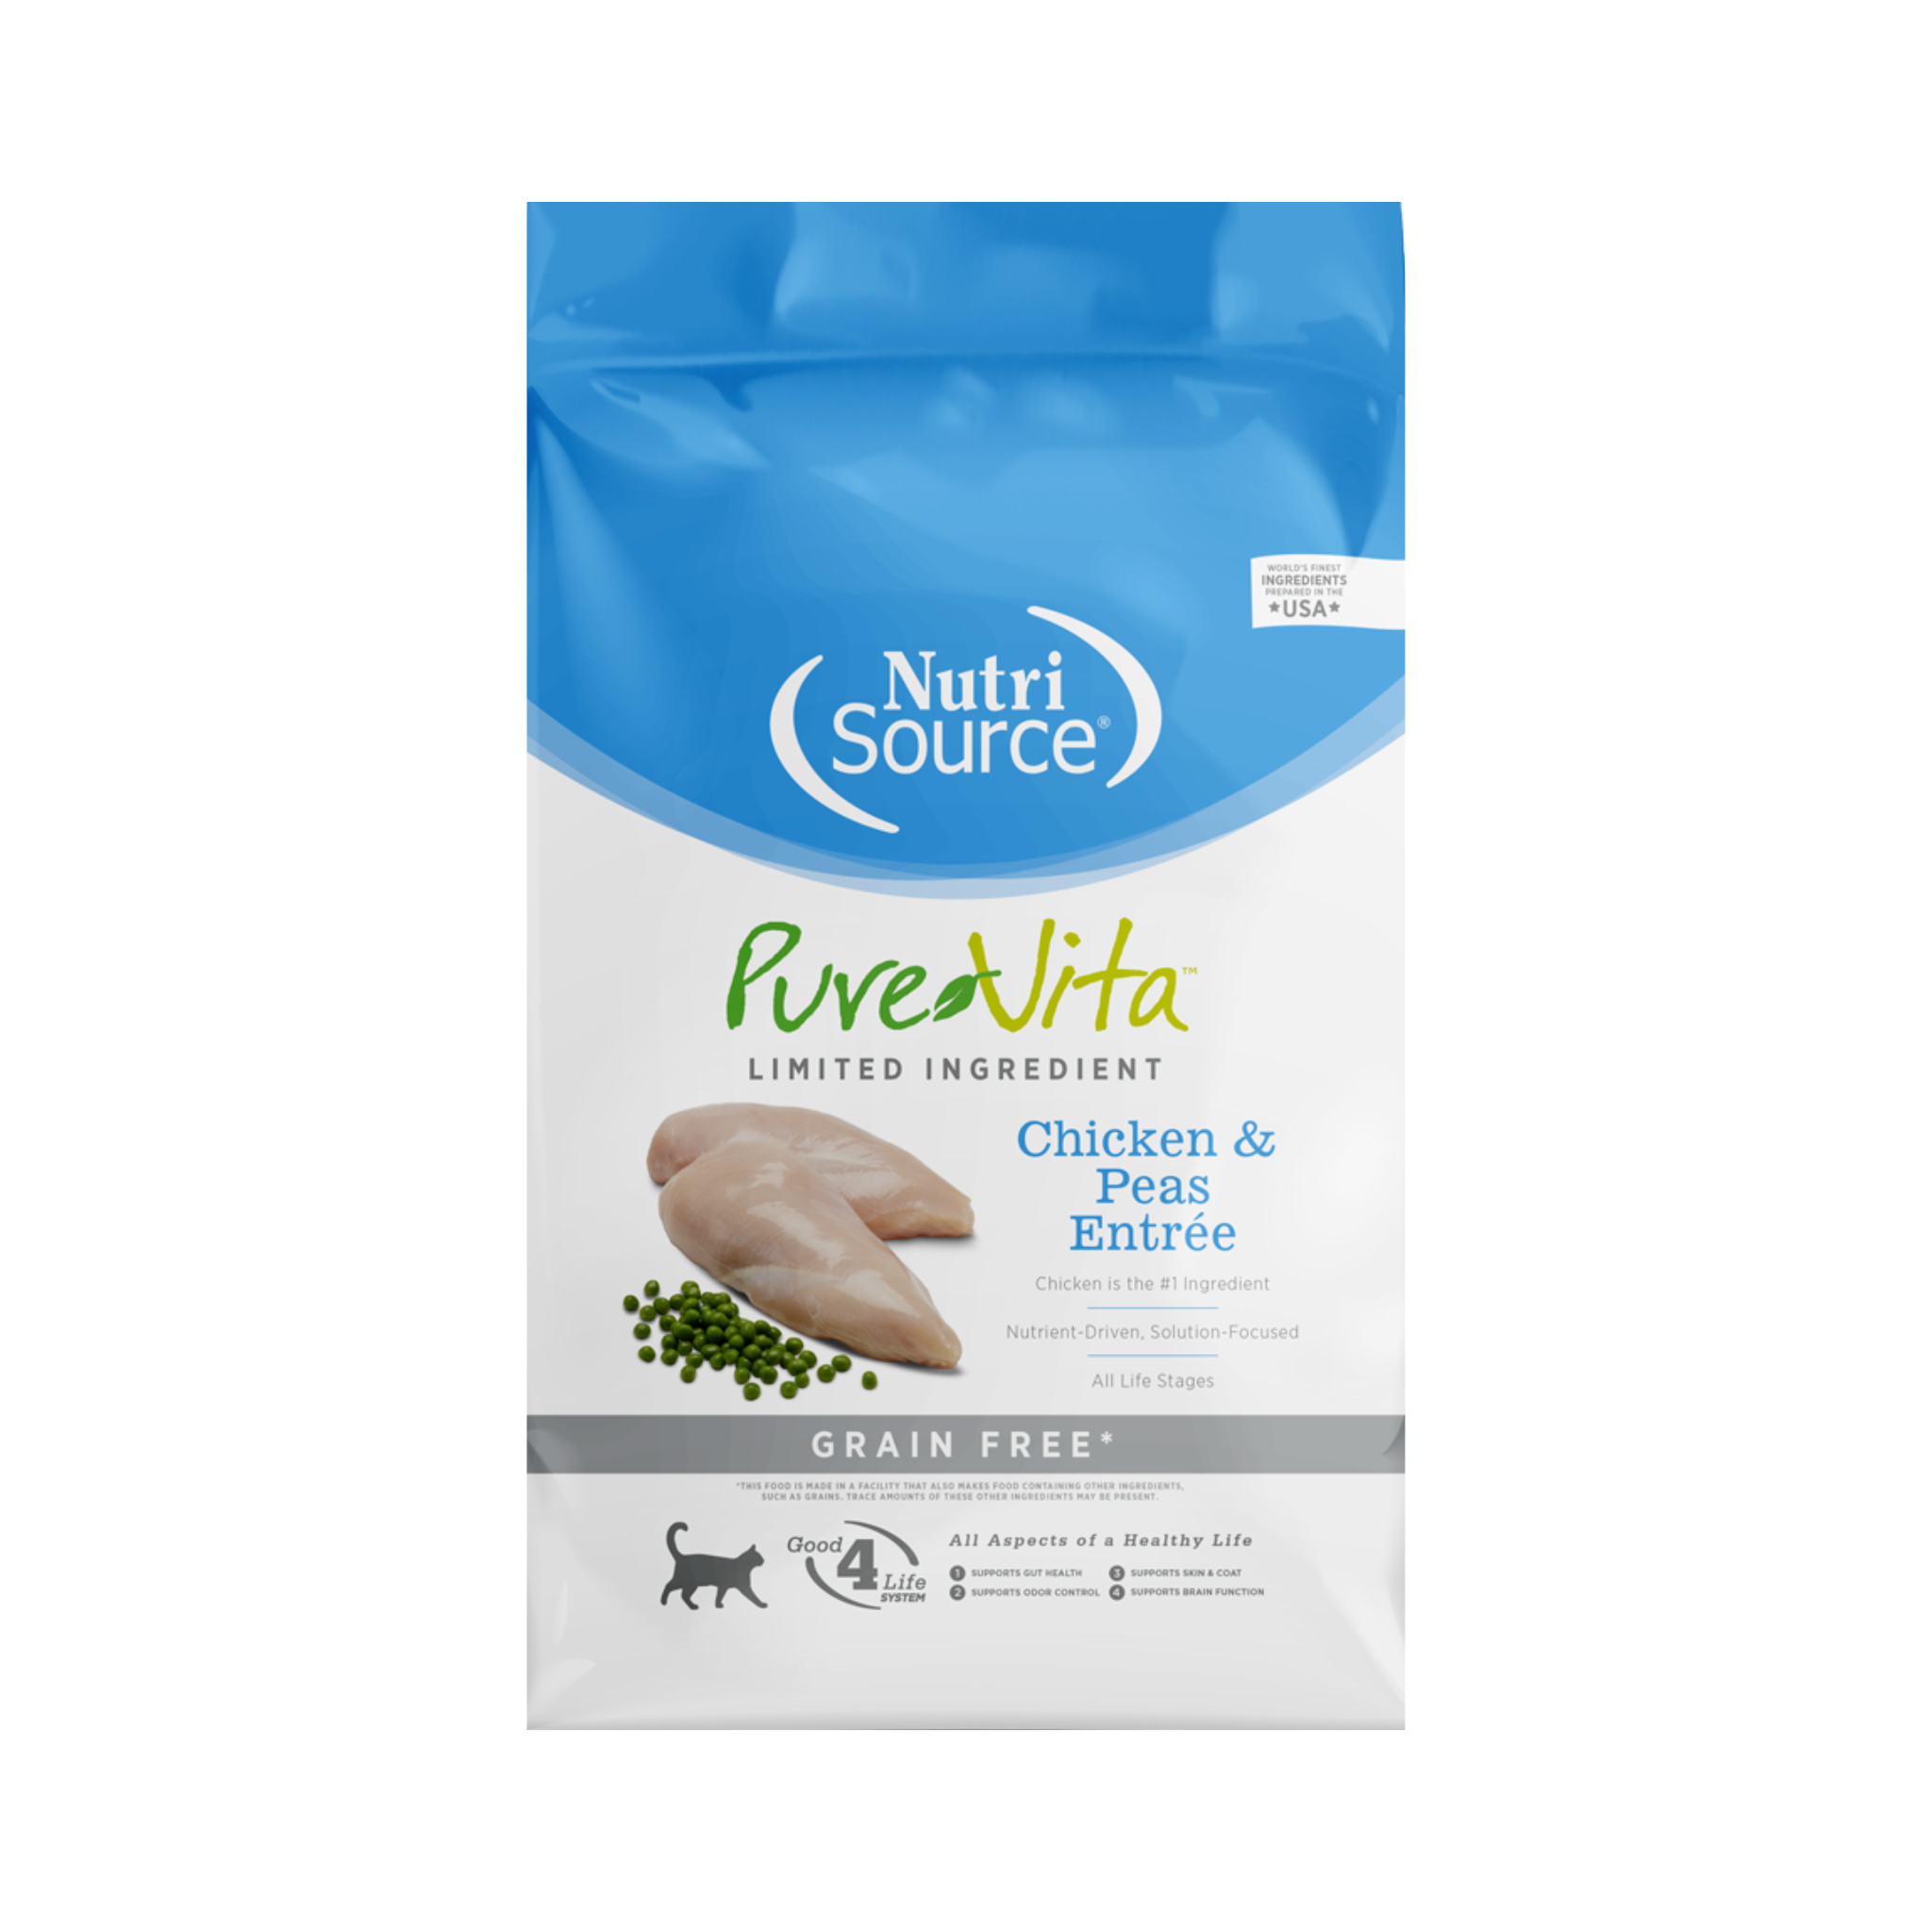 Nutrisource Pure Vita Limited Ingredient Grain Free Chicken & Pea's Entrée Dry Cat Food